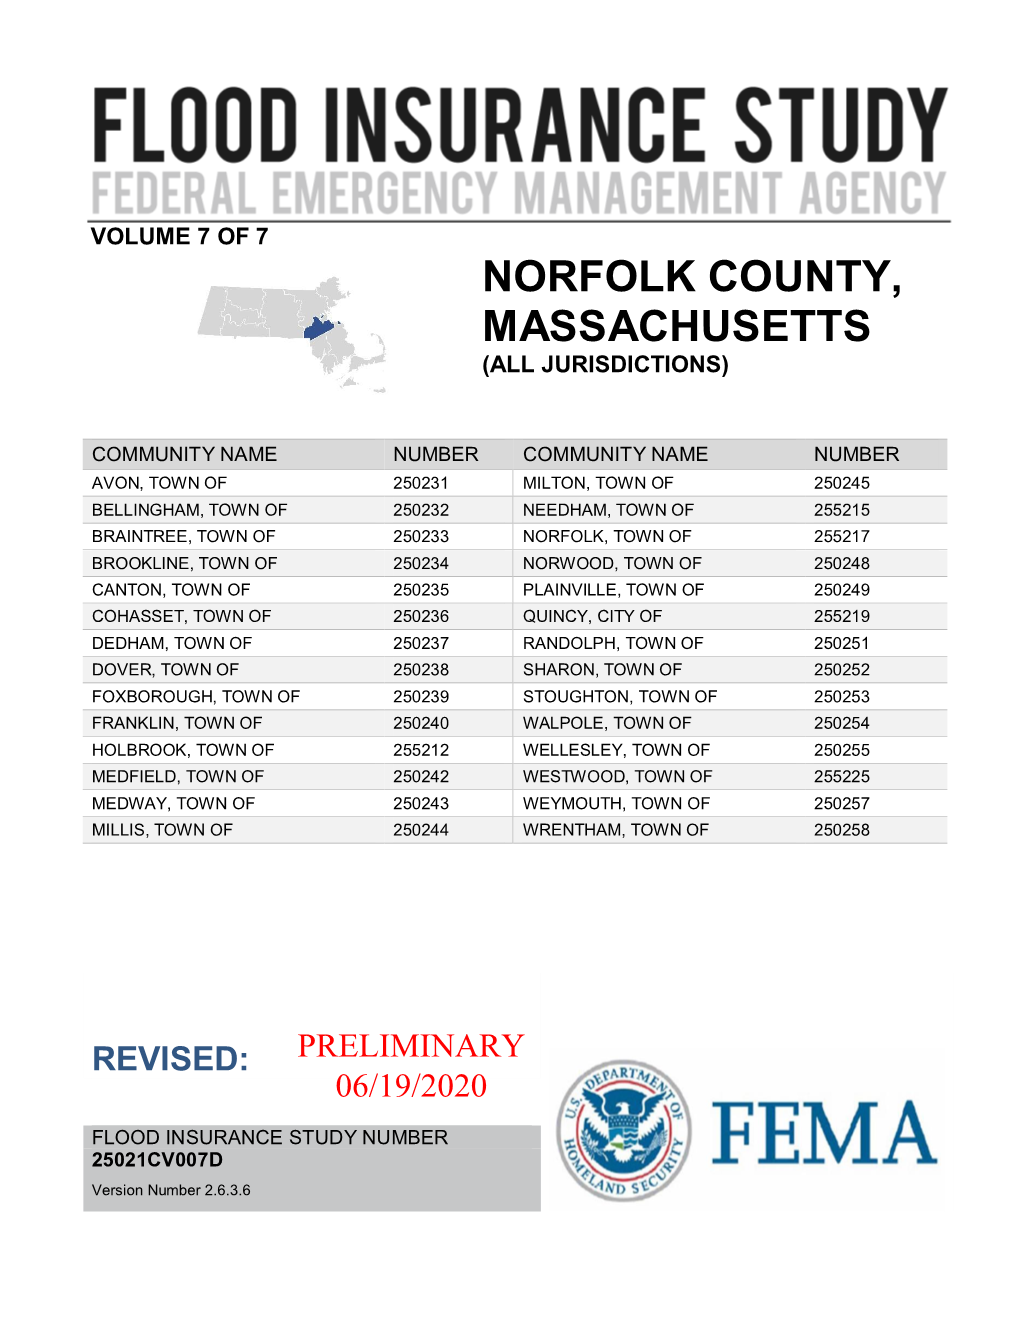 Norfolk County, Massachusetts (All Jurisdictions)